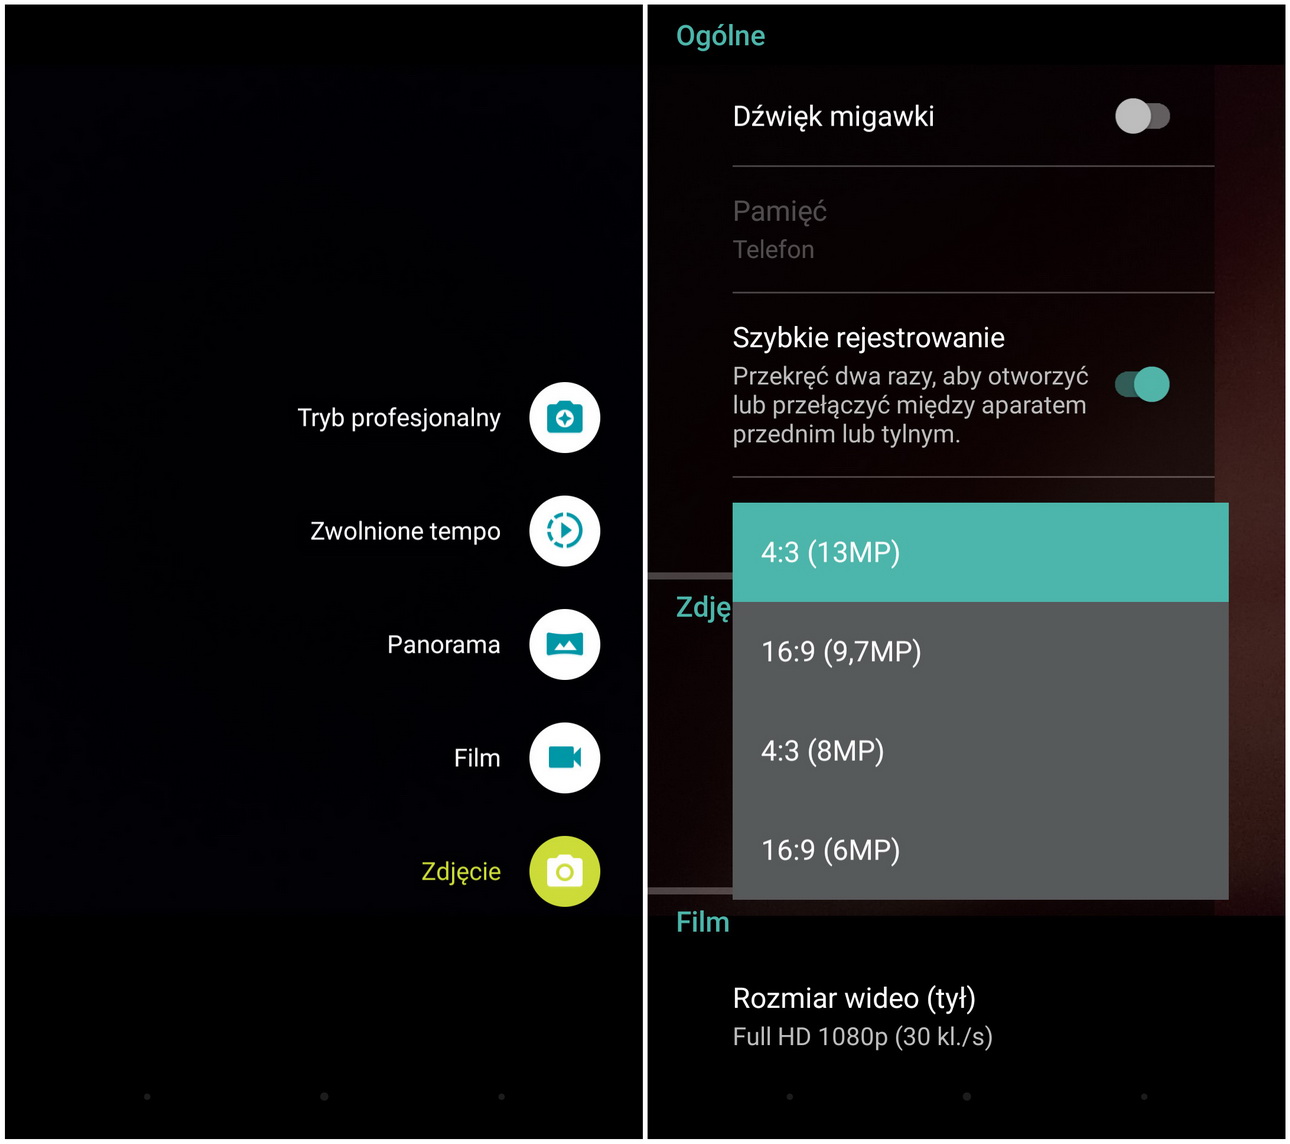 Lenogo Moto G 4-gen - Aplikacja aparatu - recenzja 90sekund.pl